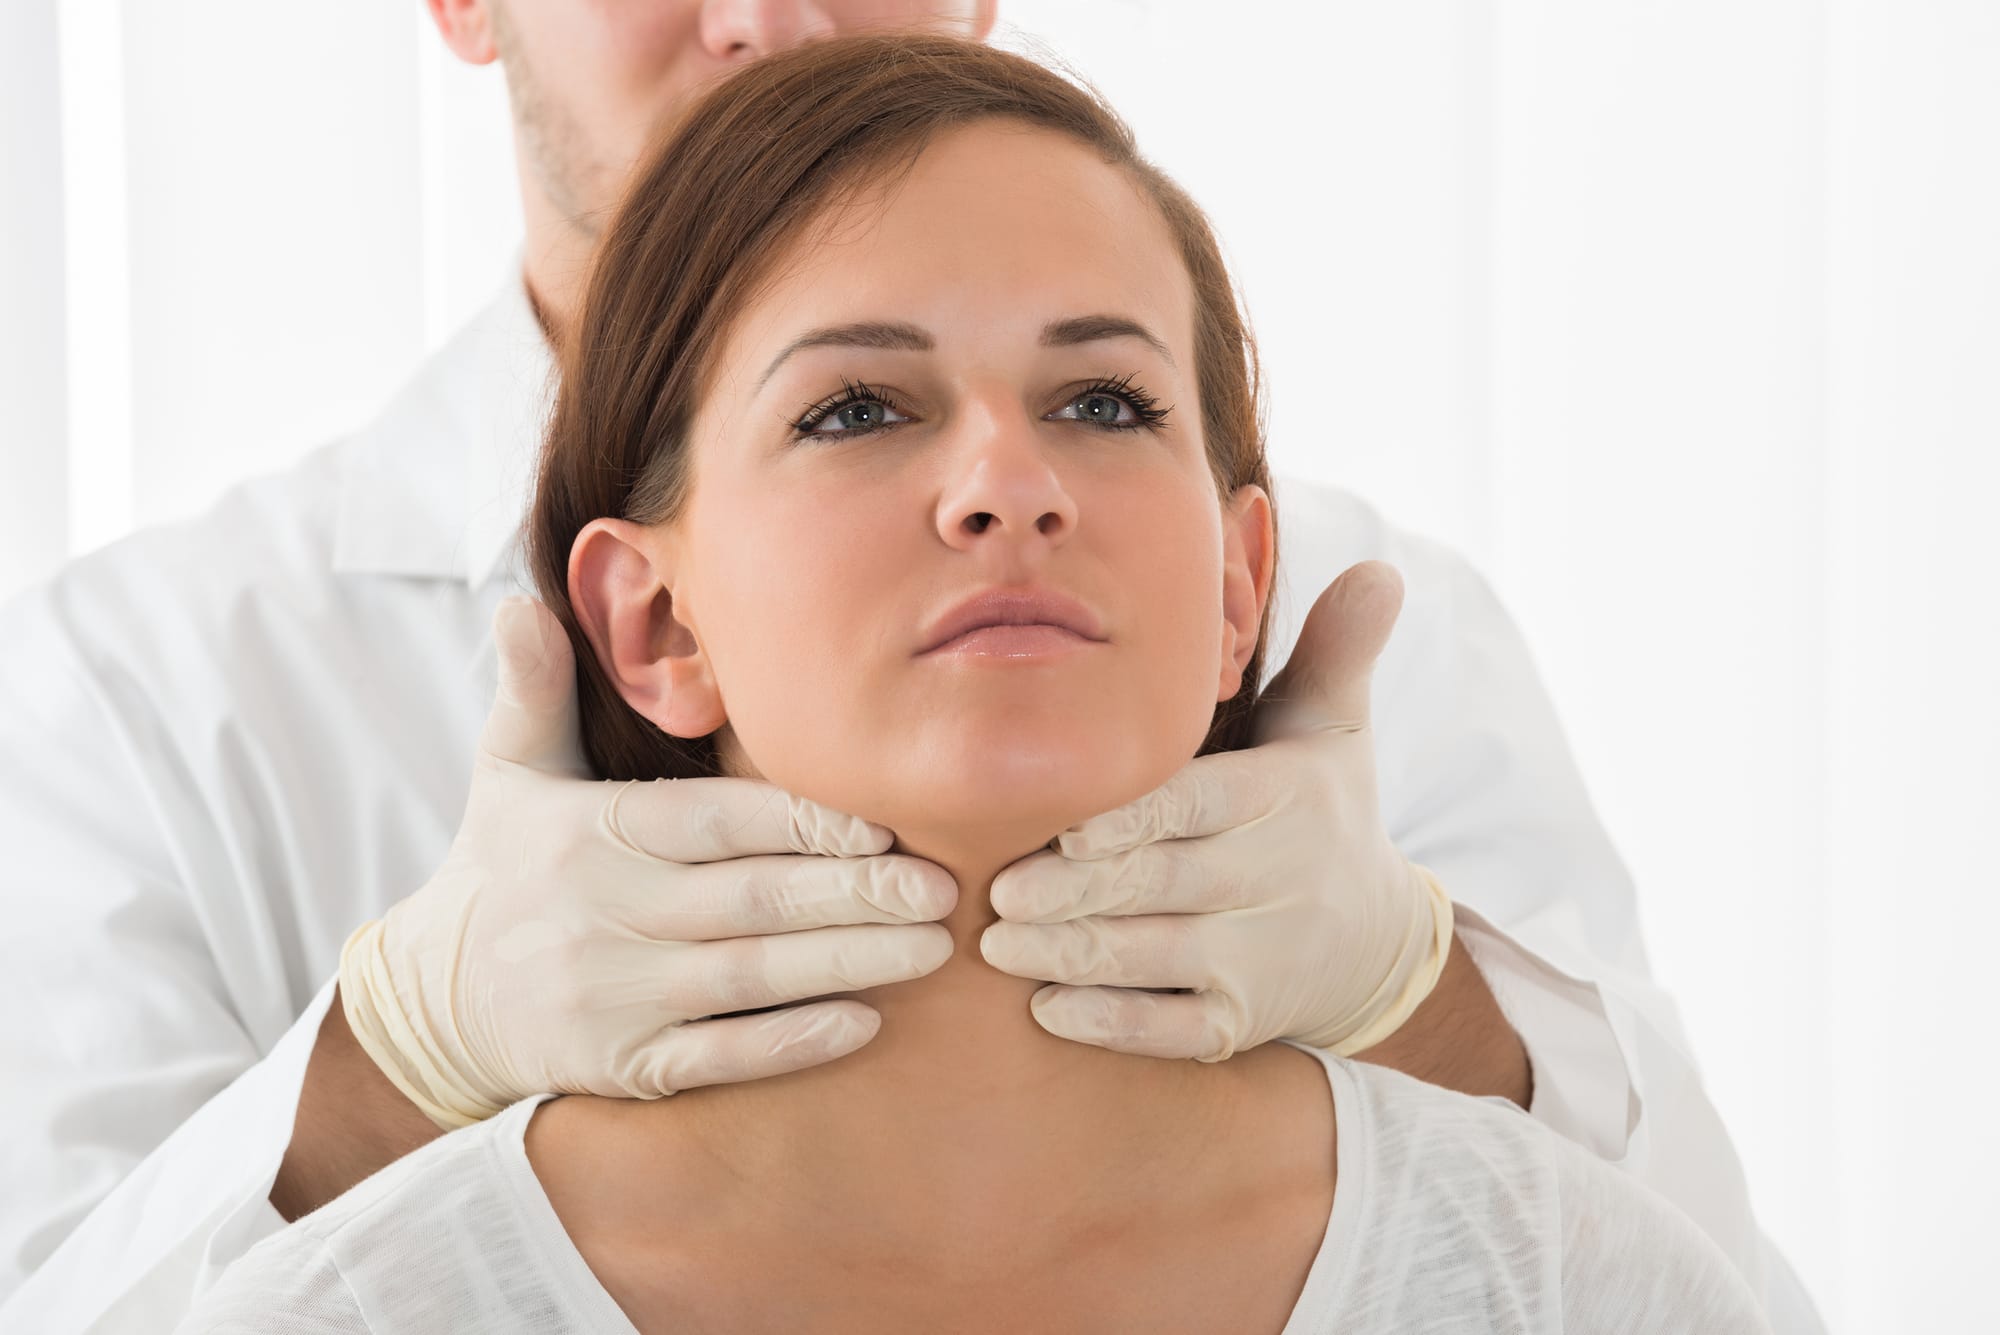 Thyroid nodules, cancer and treatment